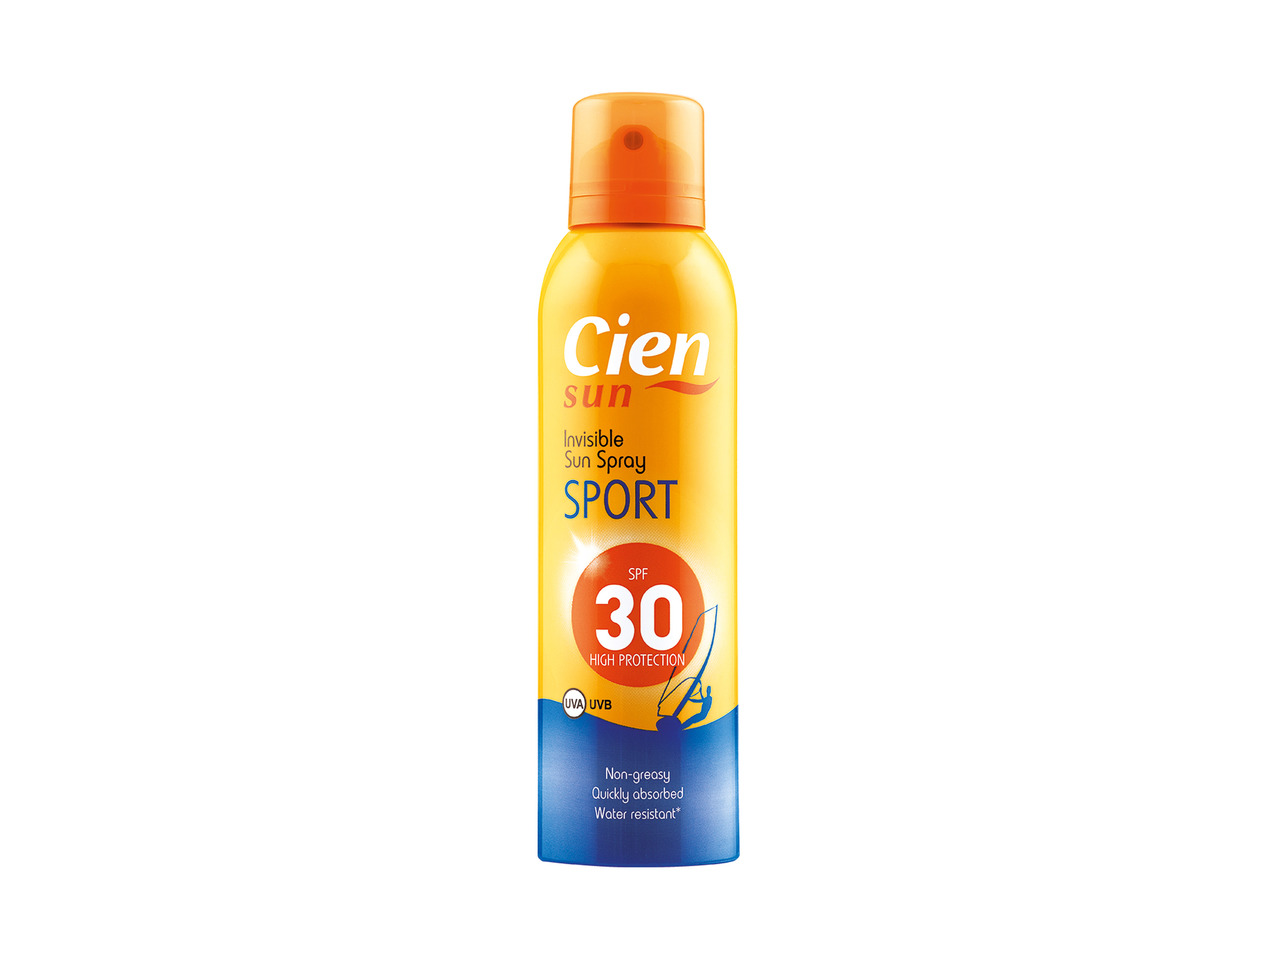 Cien Invisible Sun Spray Sport SPF 301